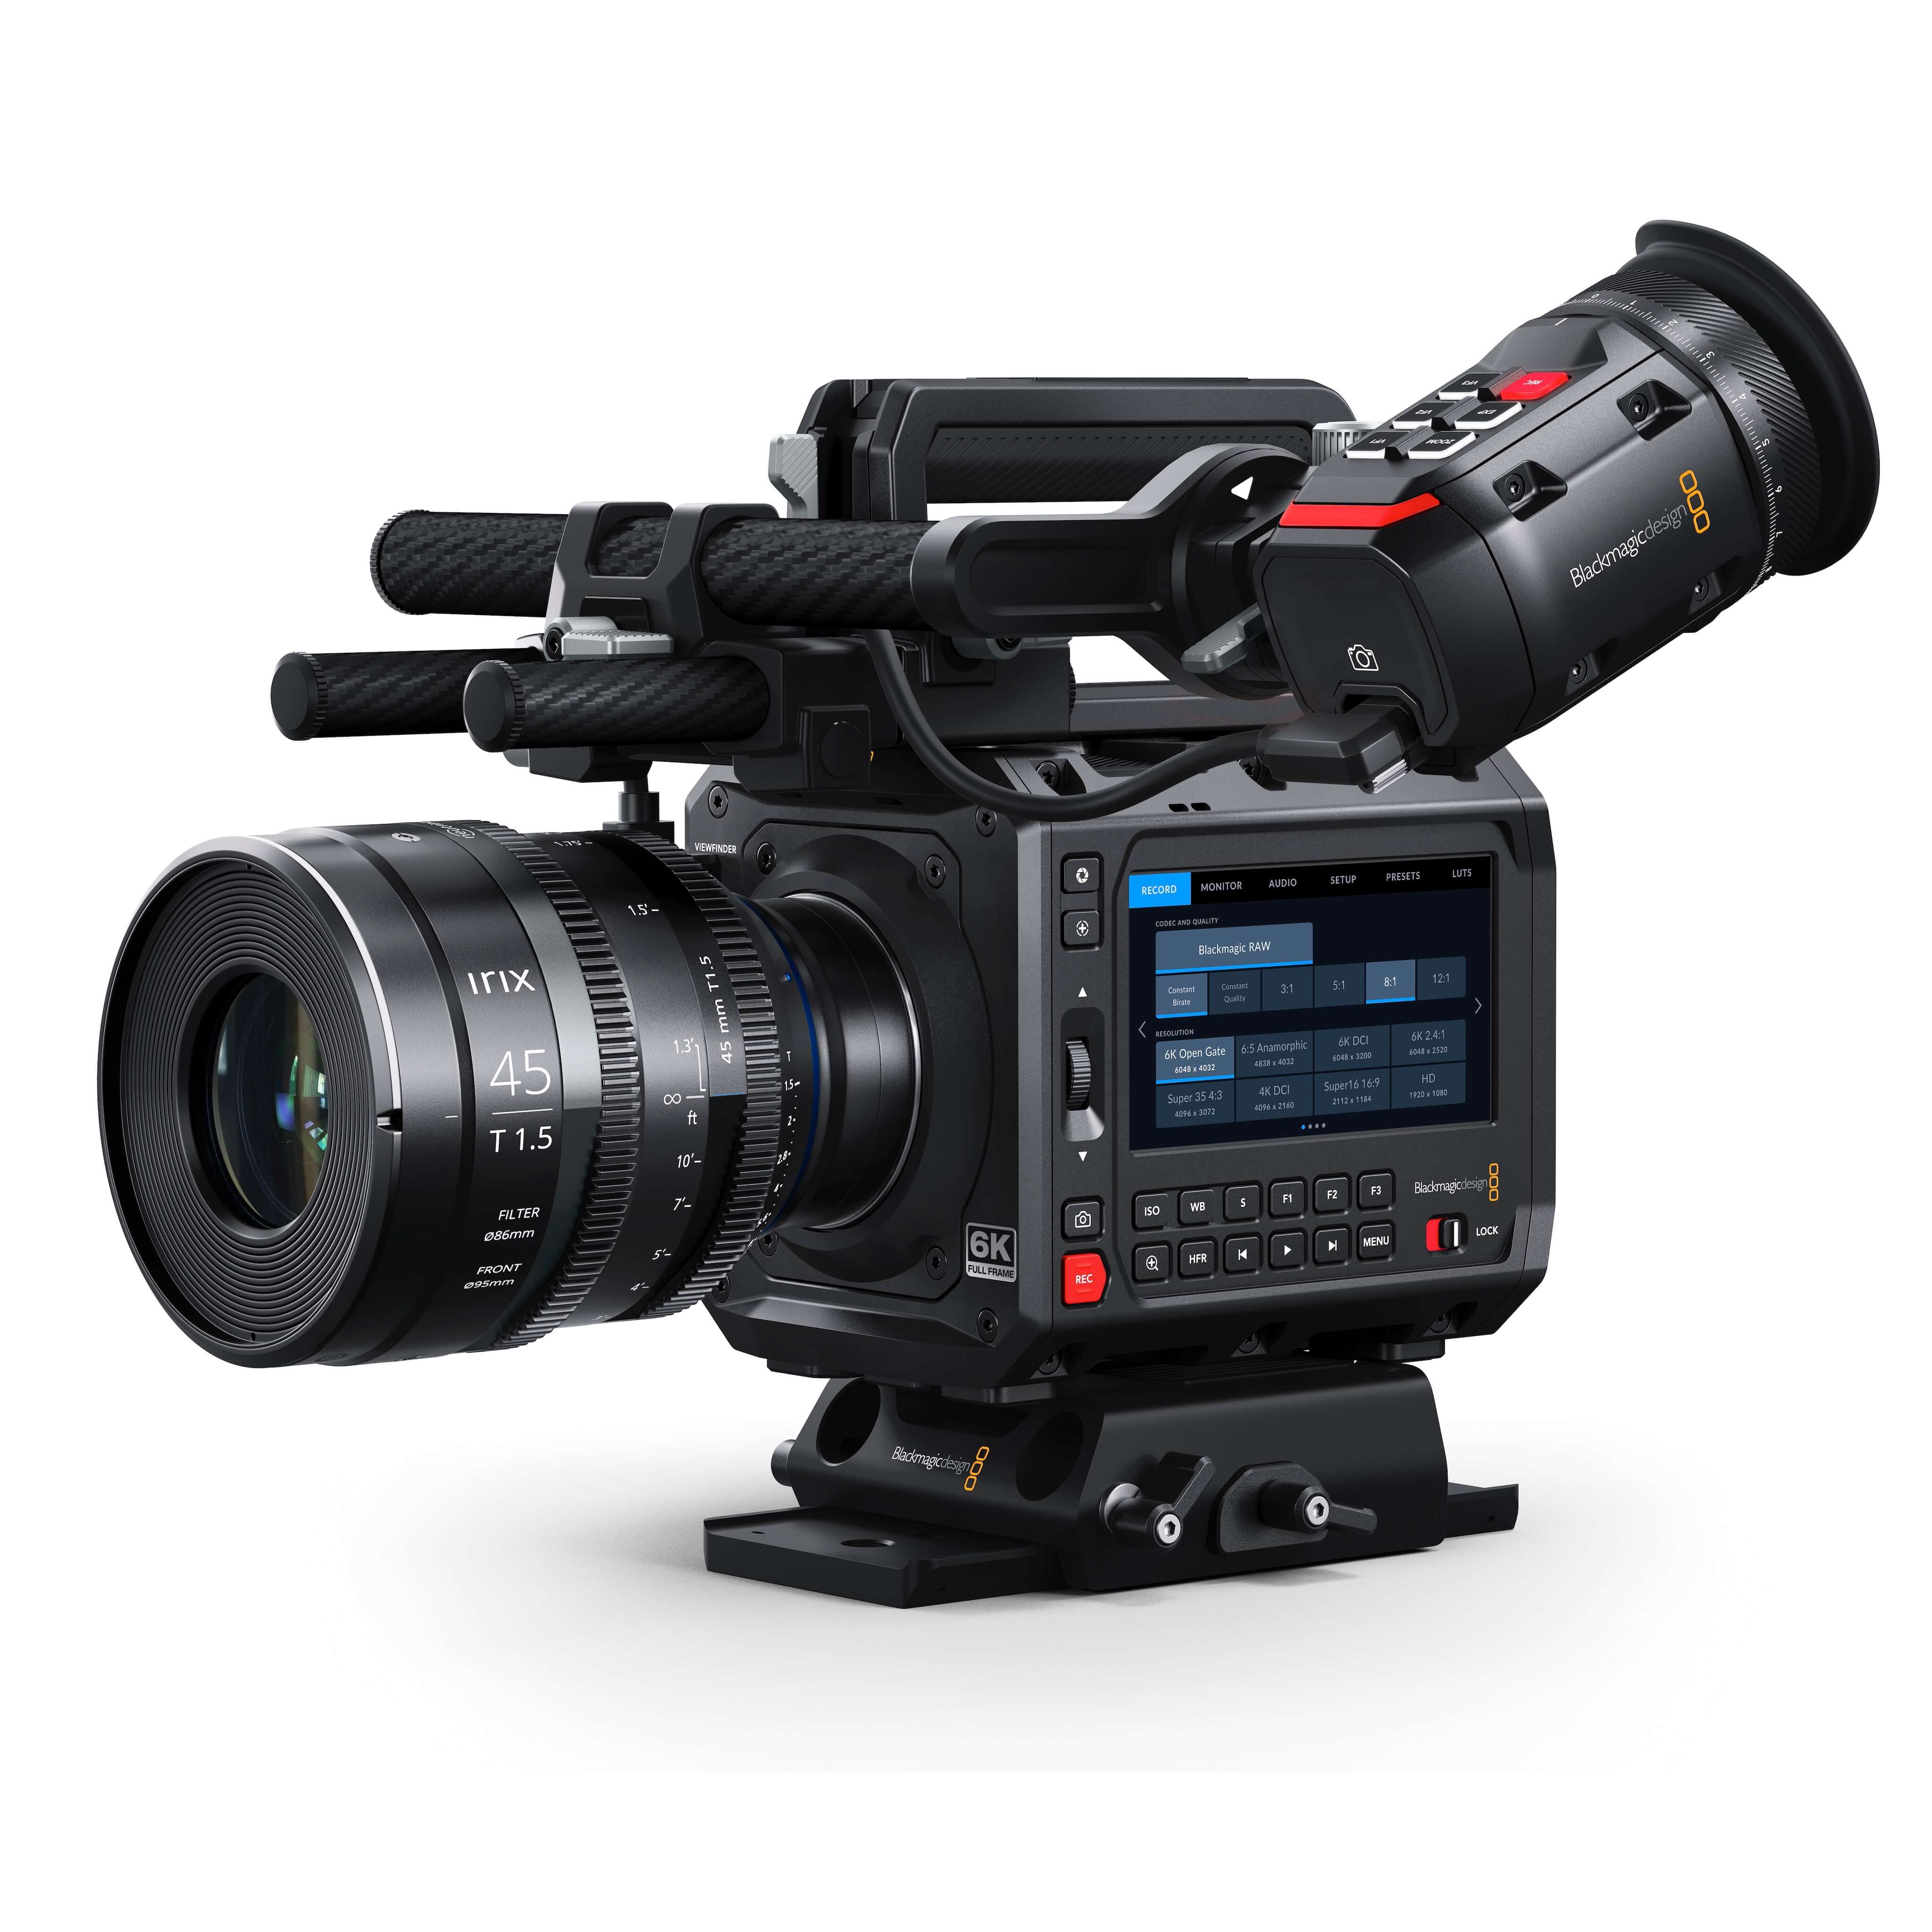 Blackmagic Design PYXIS 6K - Full Frame HDR Digital Film Camera, front angle, optional equipment shown